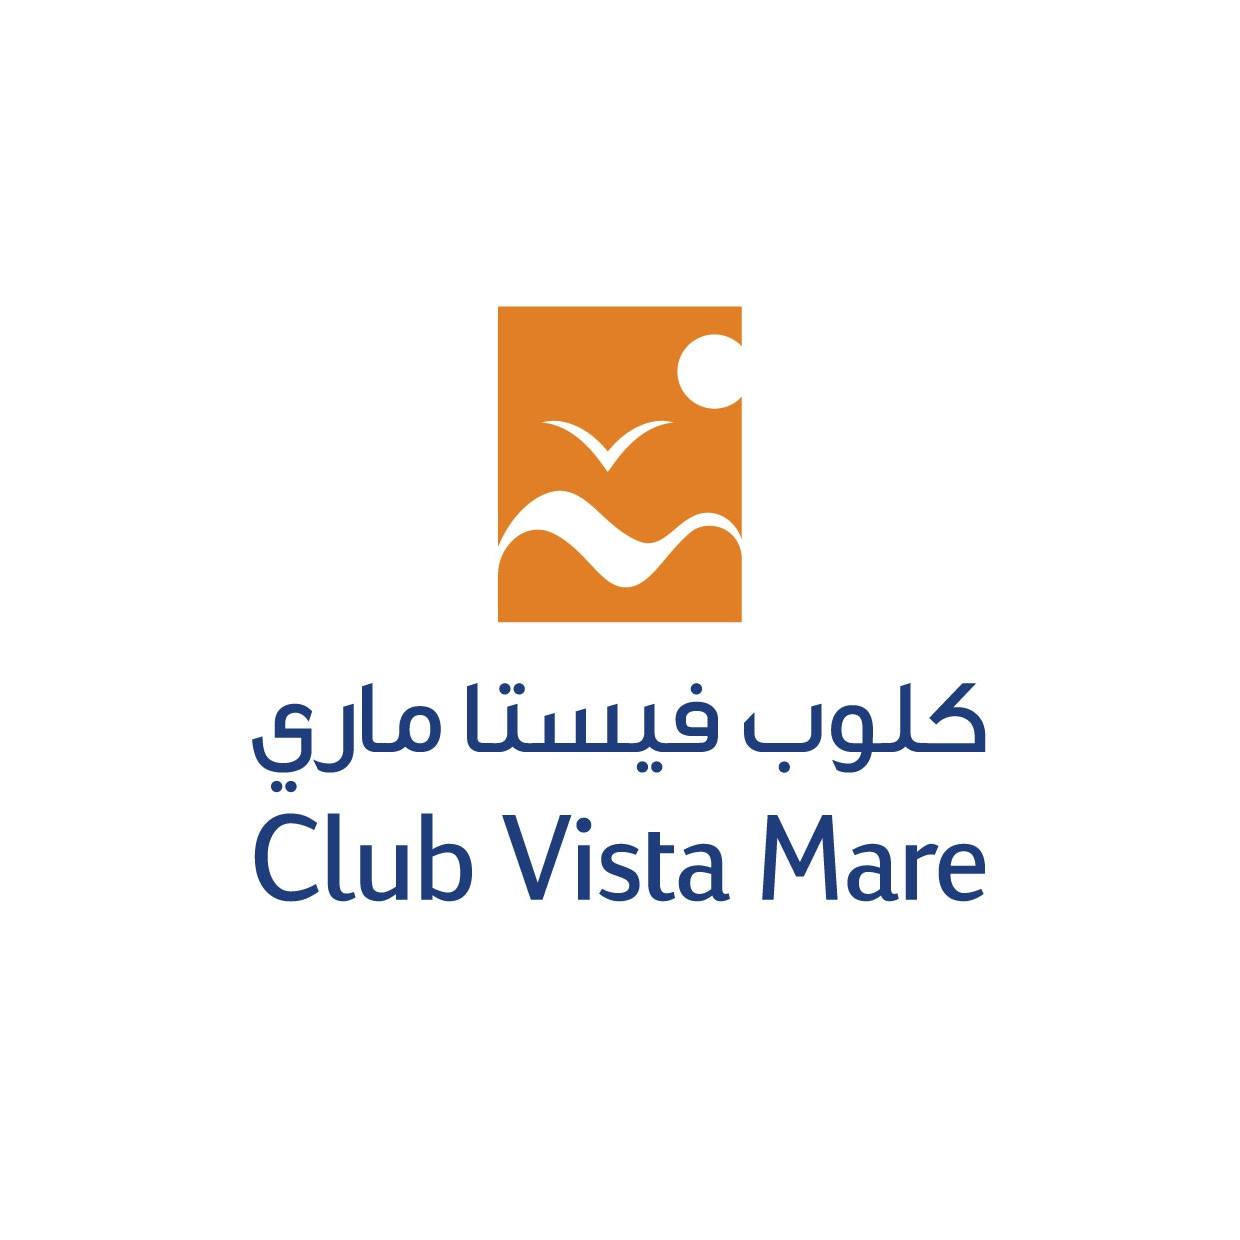 Club Vista Mare - Coming Soon in UAE